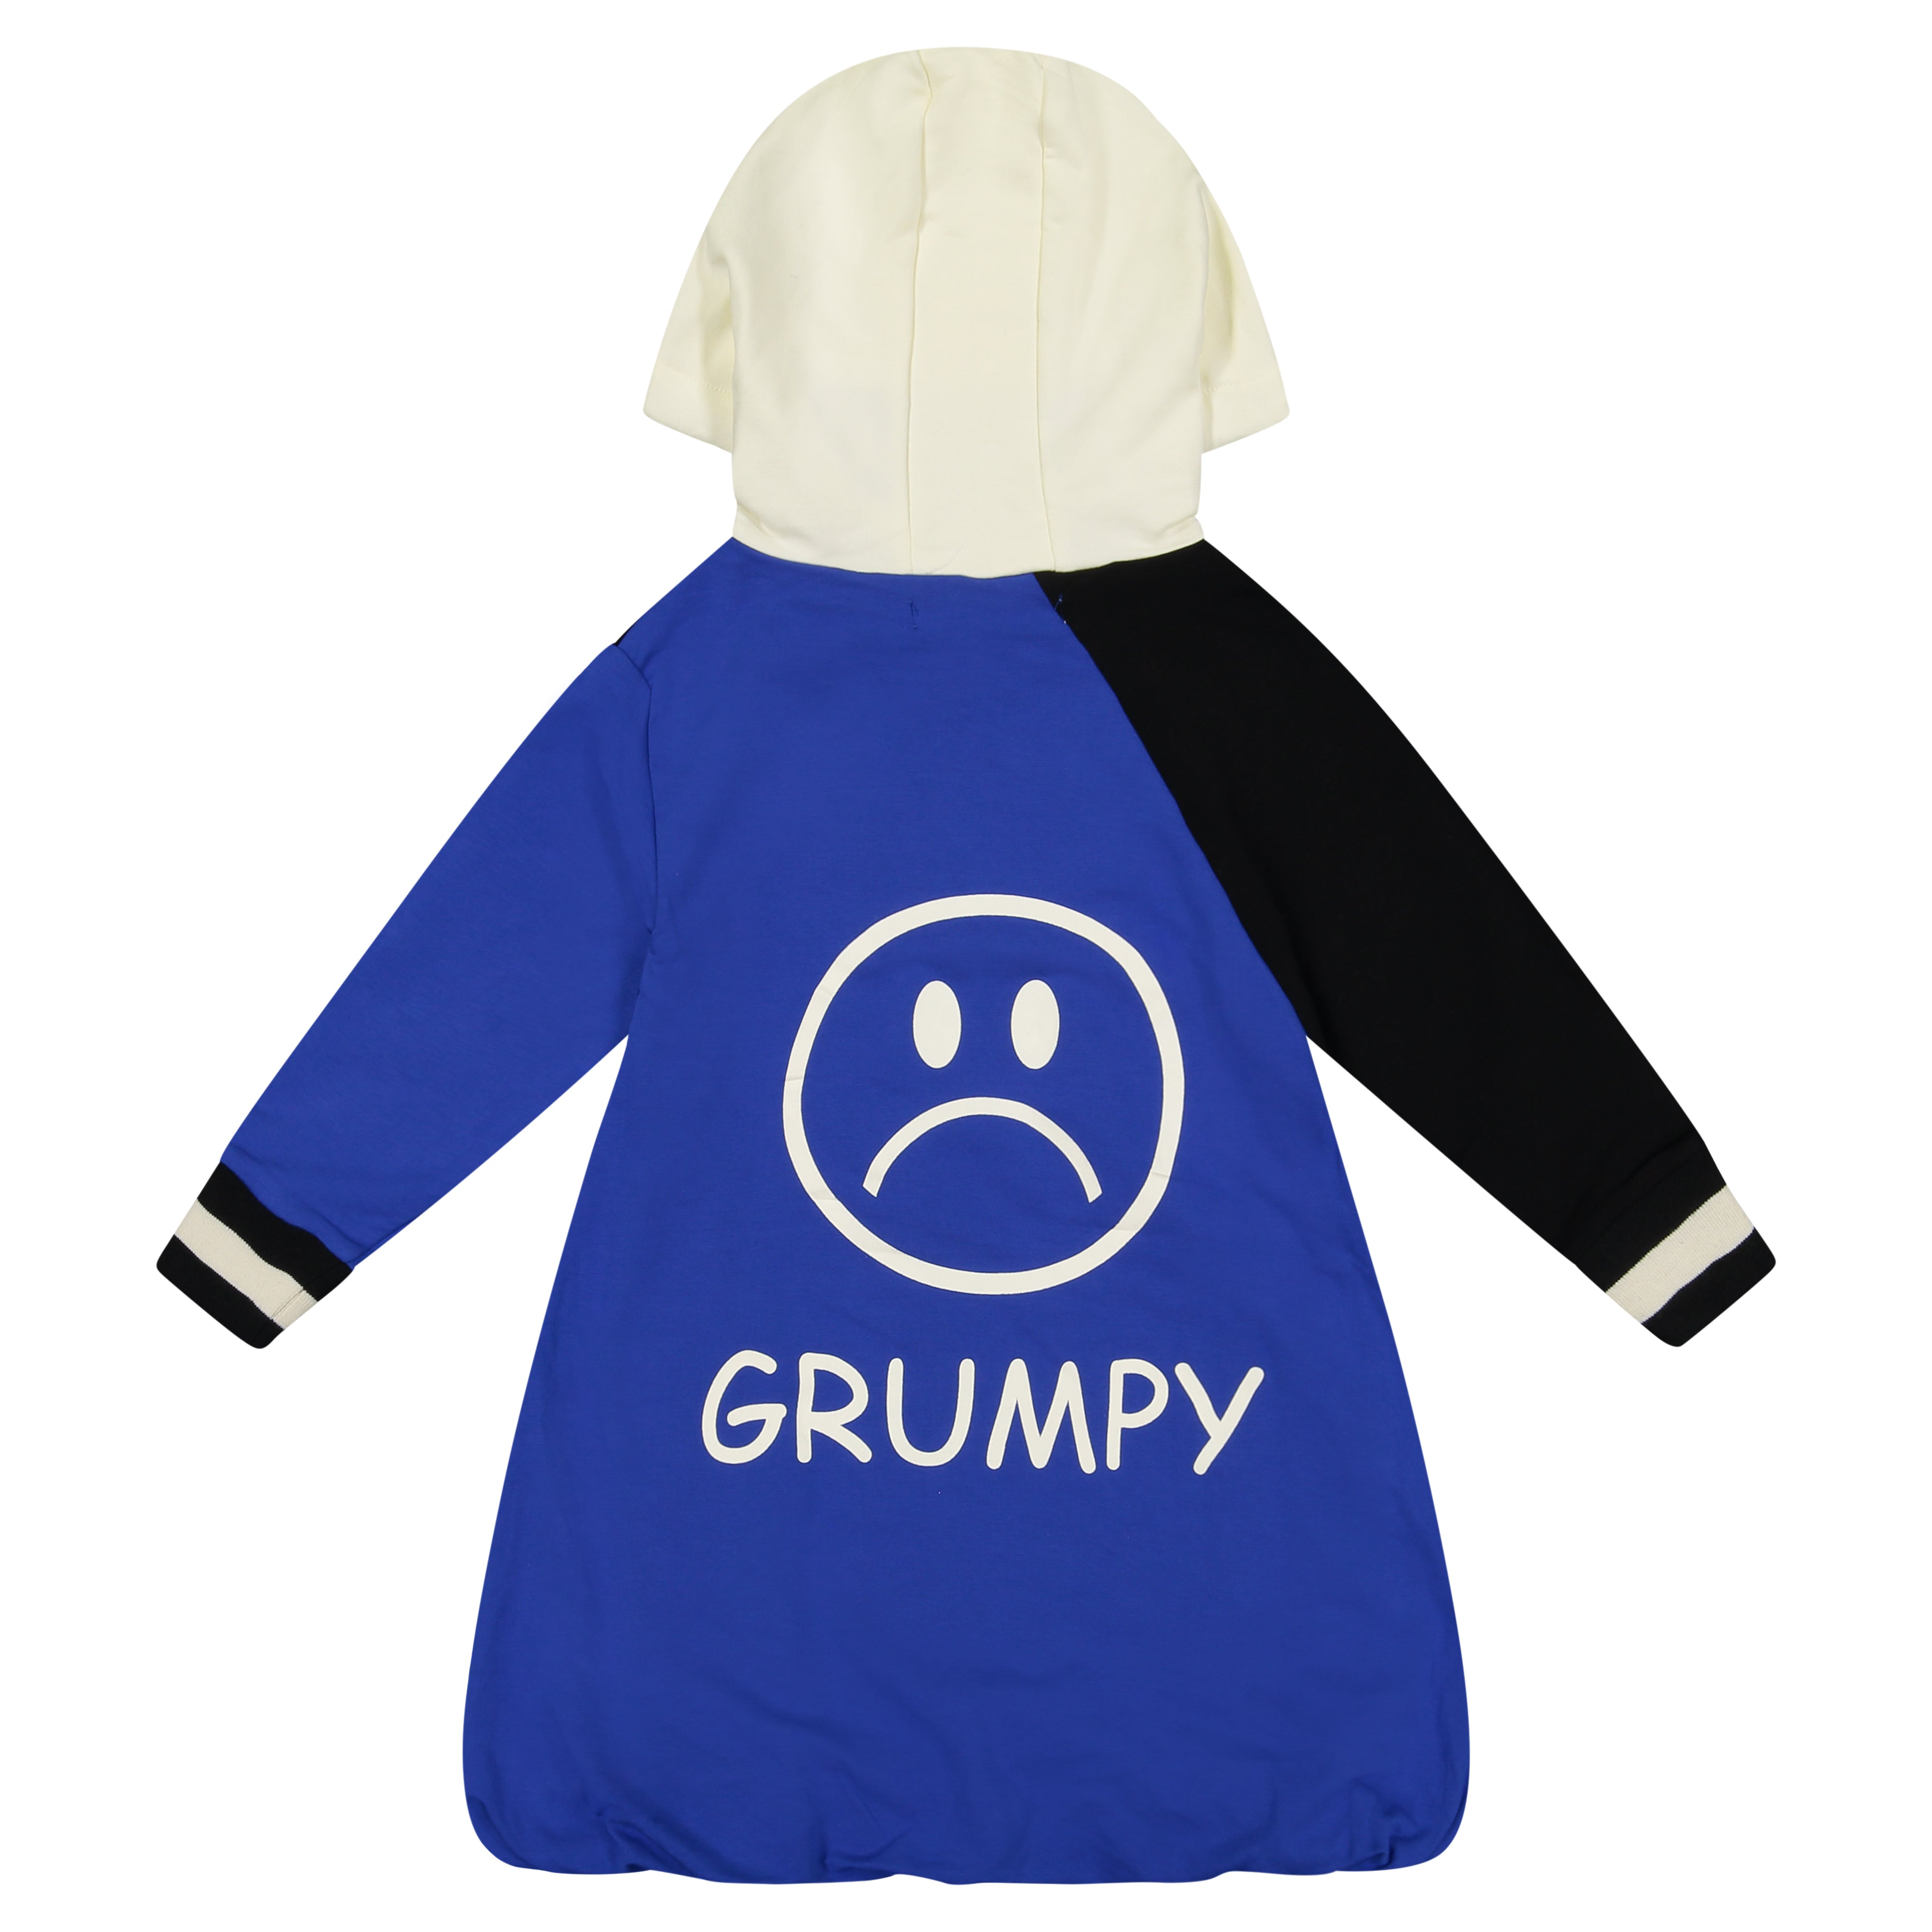 Happy - Grumpy Dress